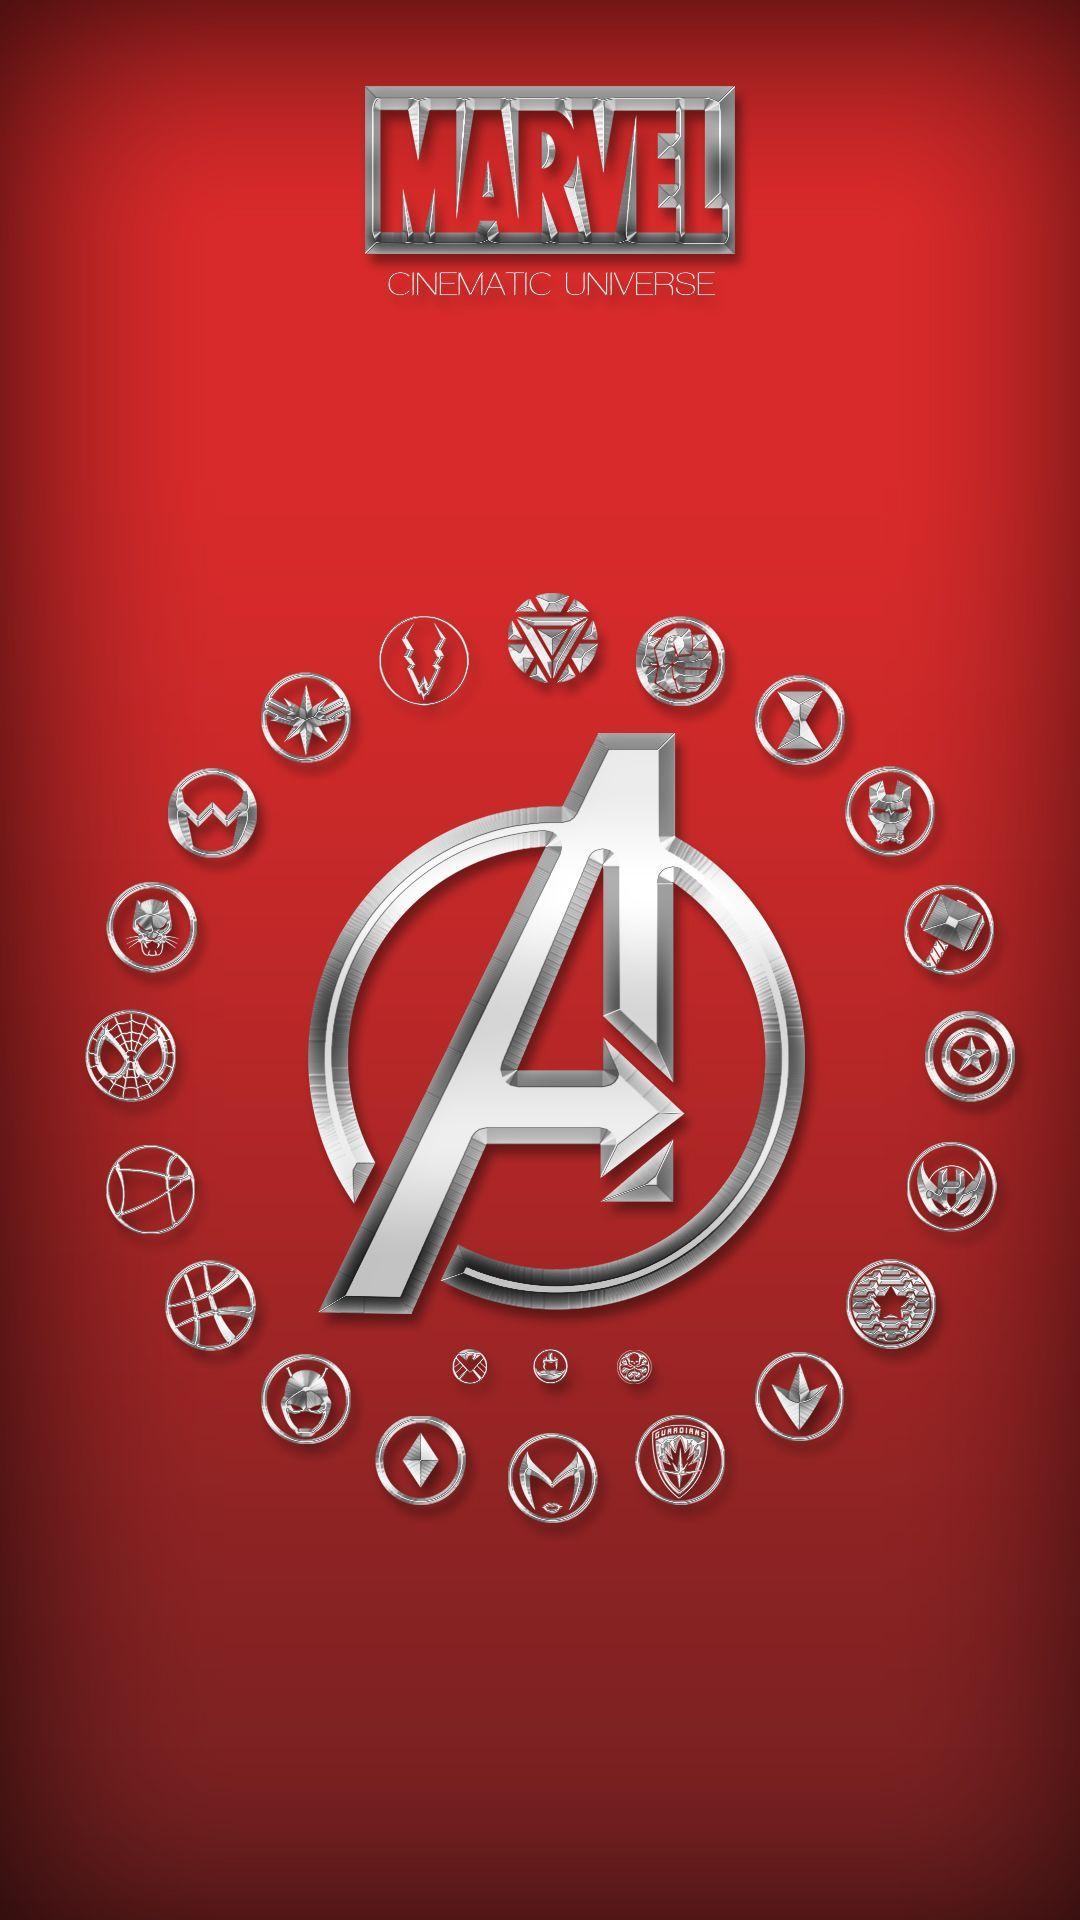 Avengers Logo iPhone Wallpaper Free Avengers Logo iPhone